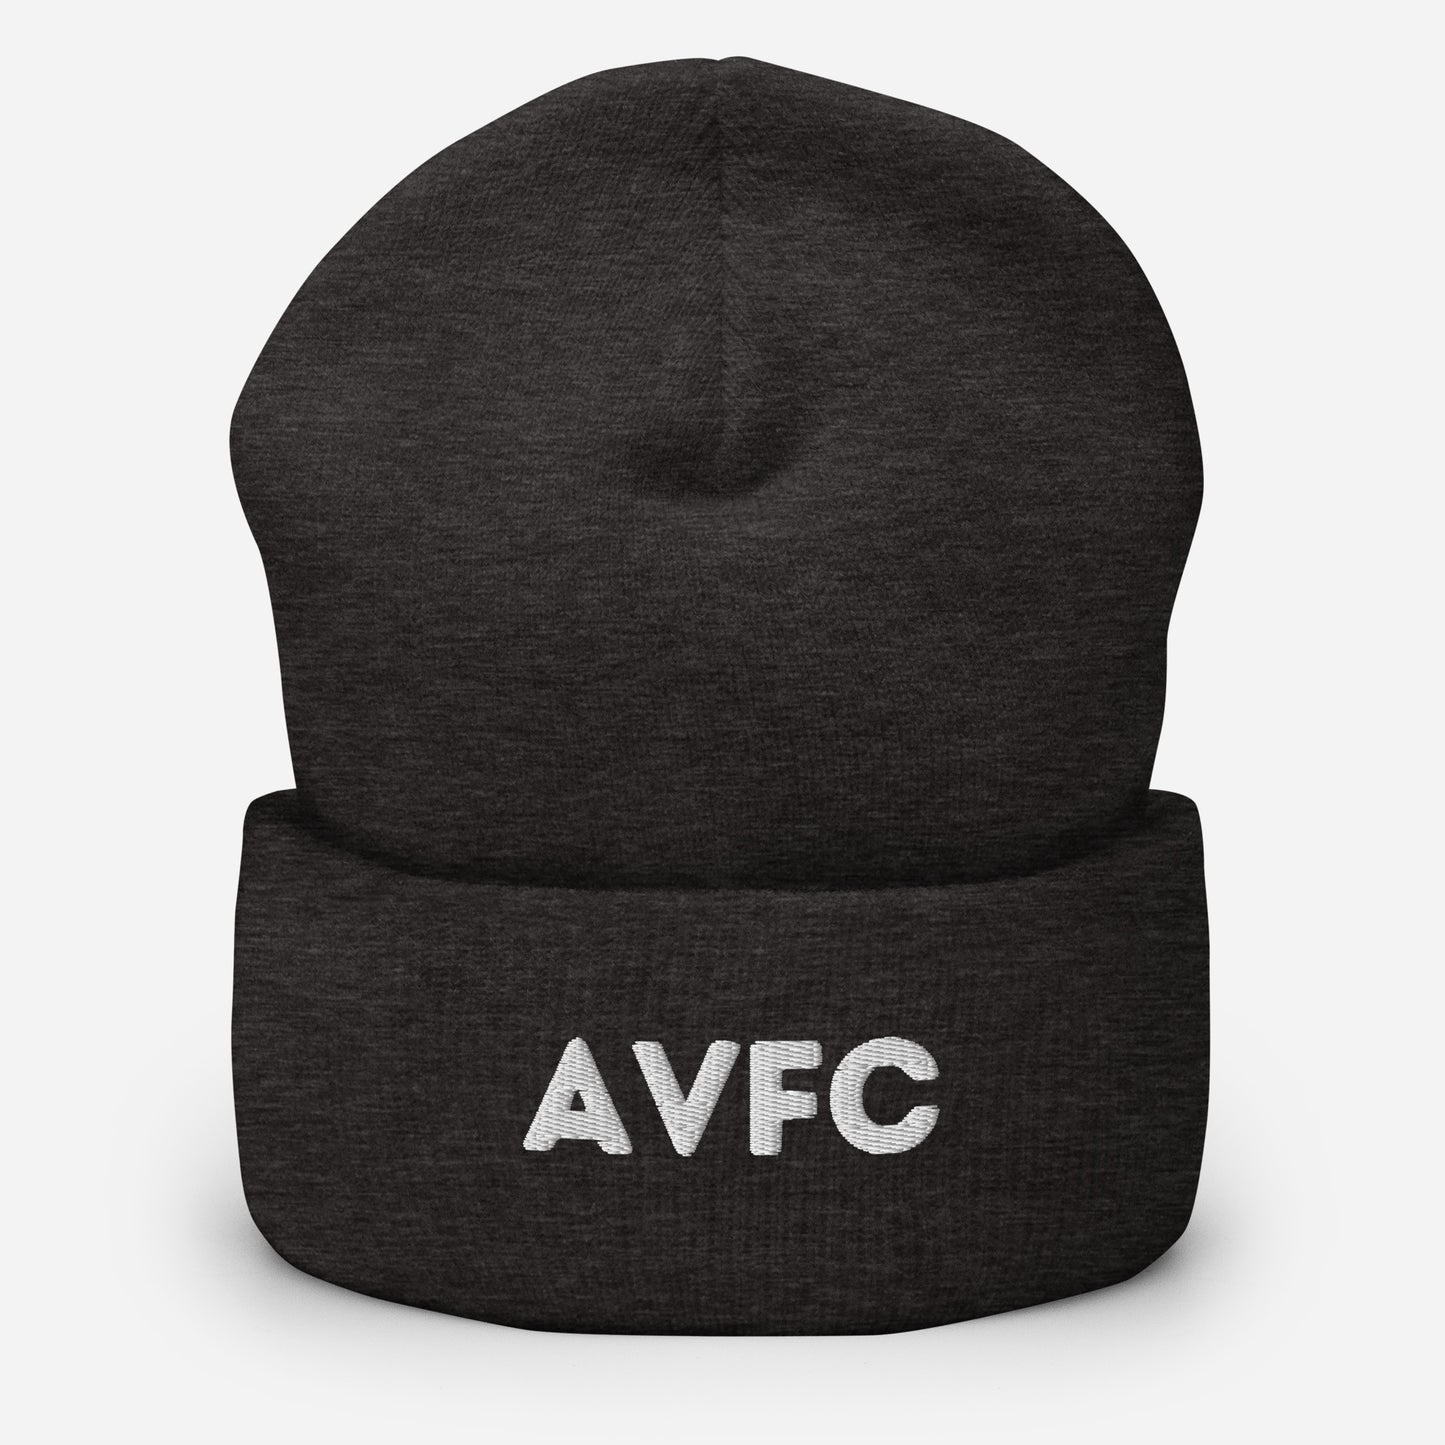 AVFC (White Embroidery) Cuffed Beanie Hat